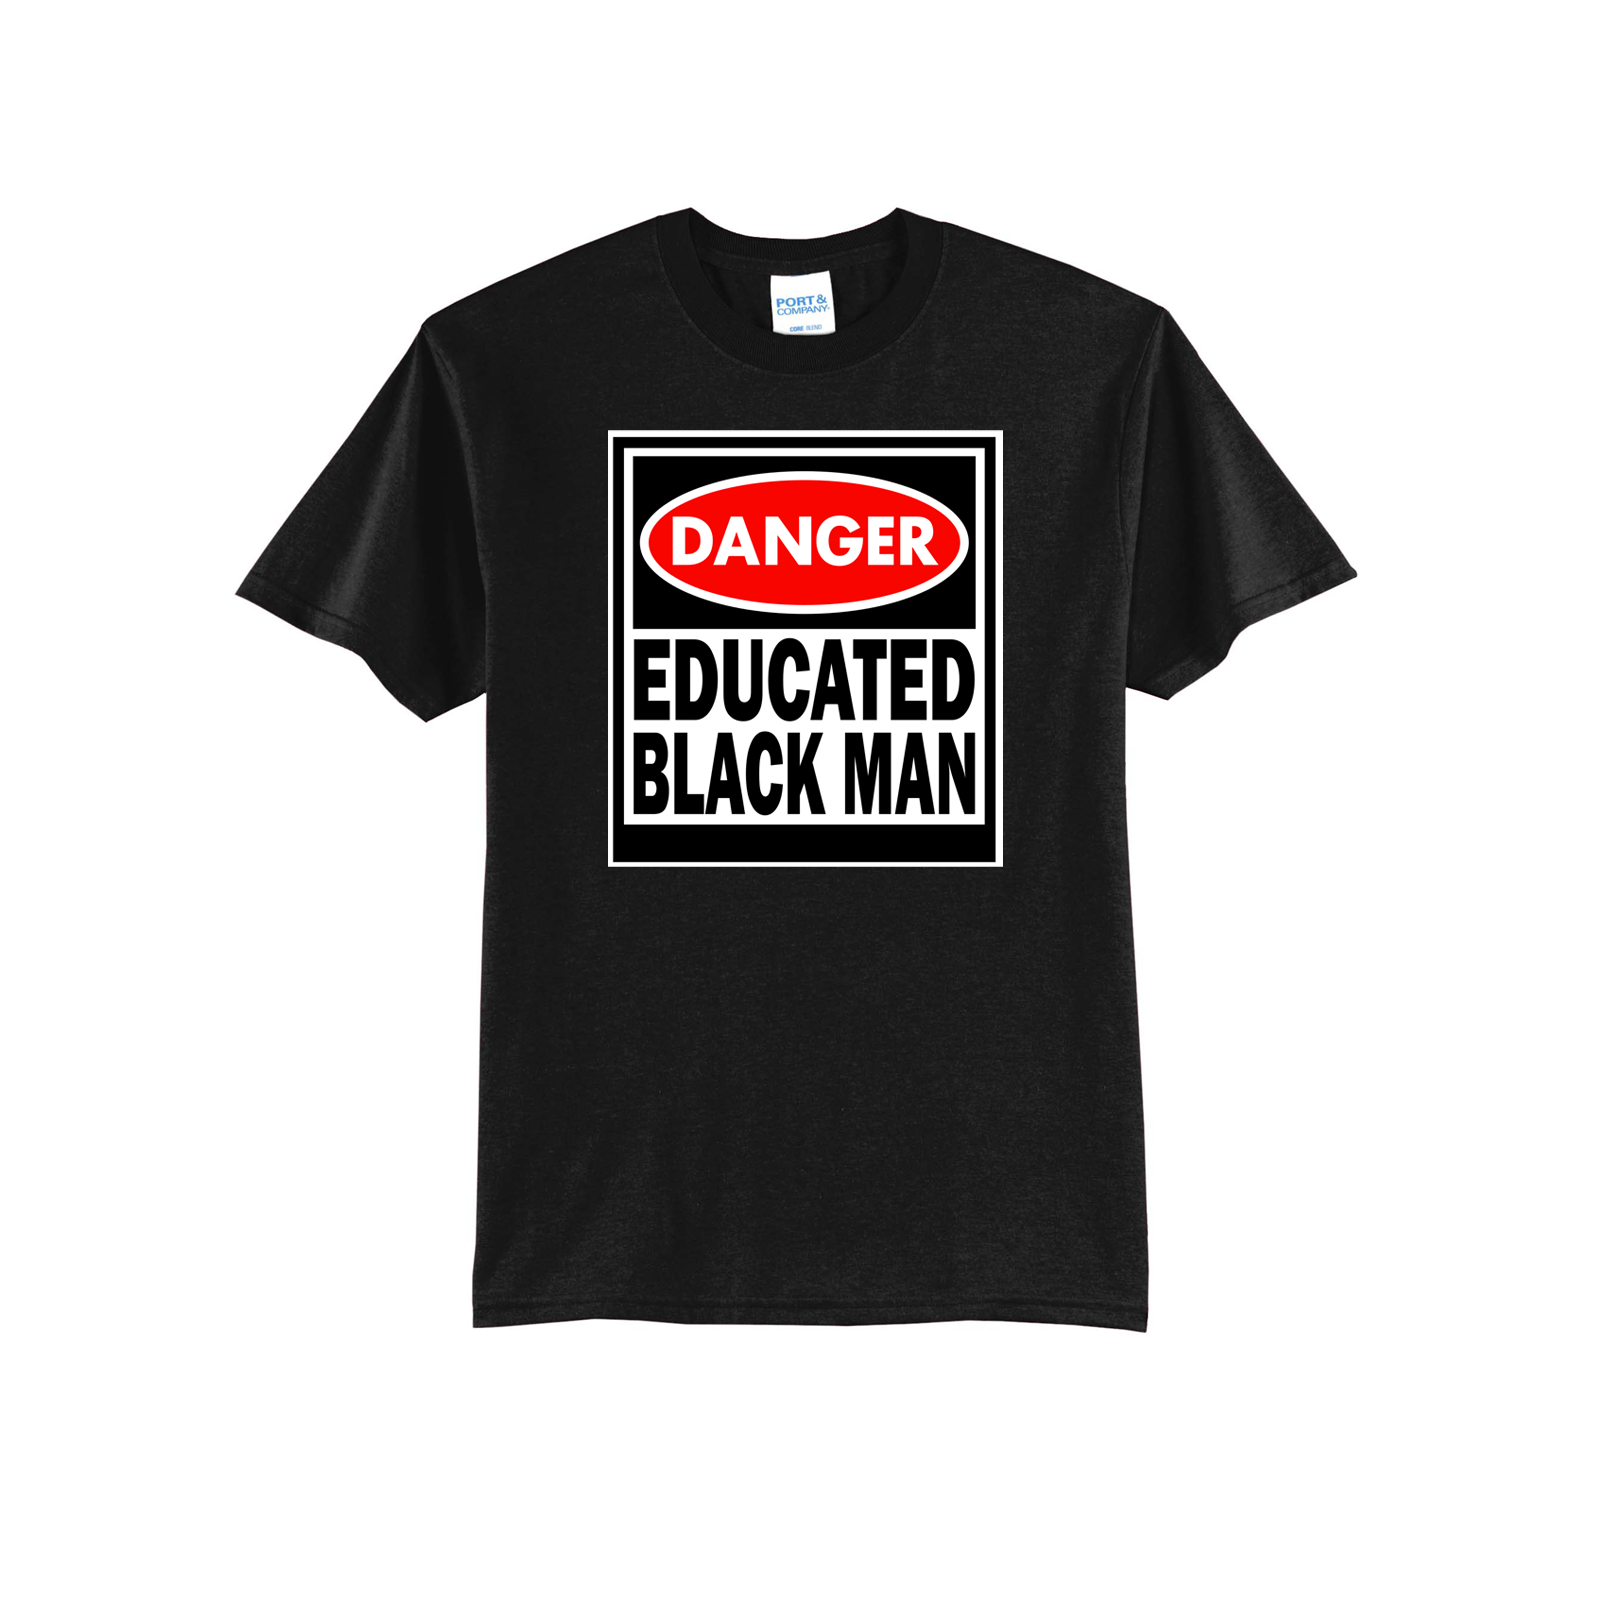 'Danger Educated Black Man' Short Sleeve Tee